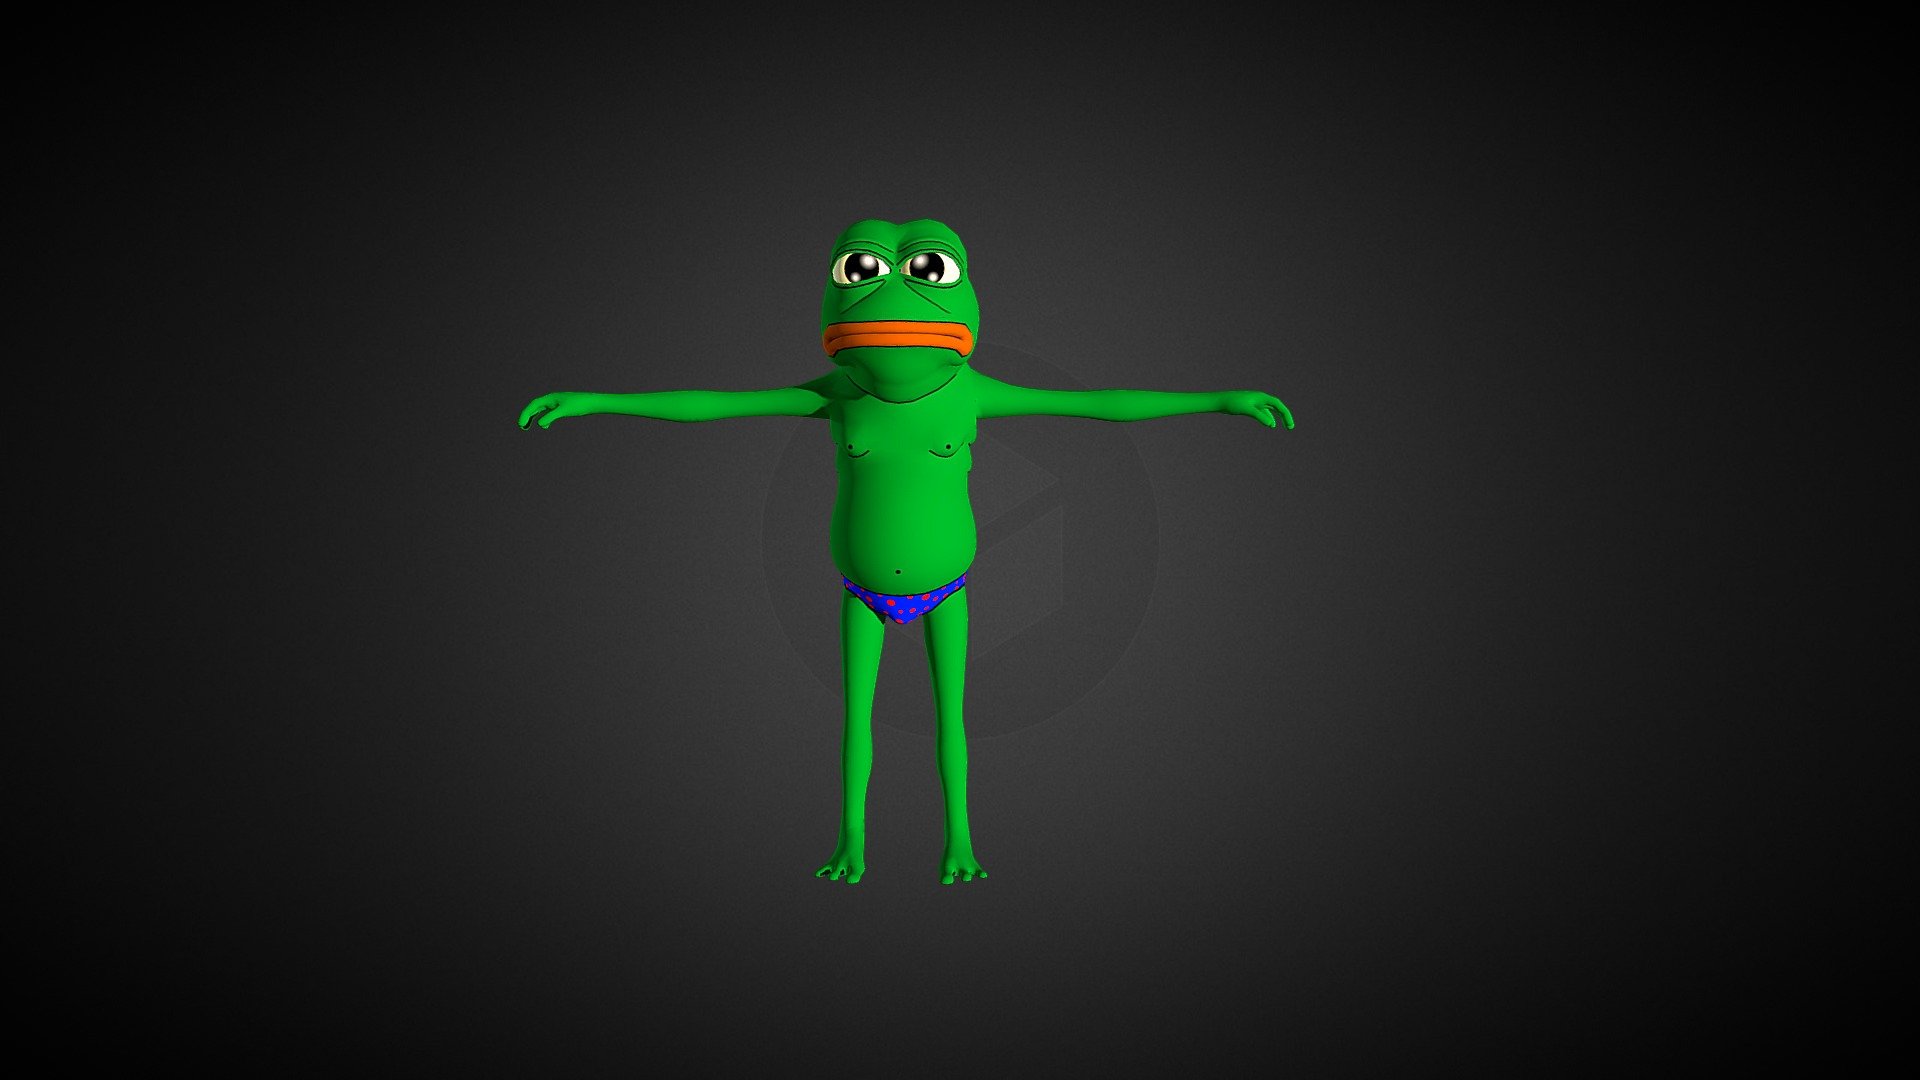 Pepe the frog dancing - Pepe the frog - Buy Royalty Free 3D model by 3dprefabs 3d model